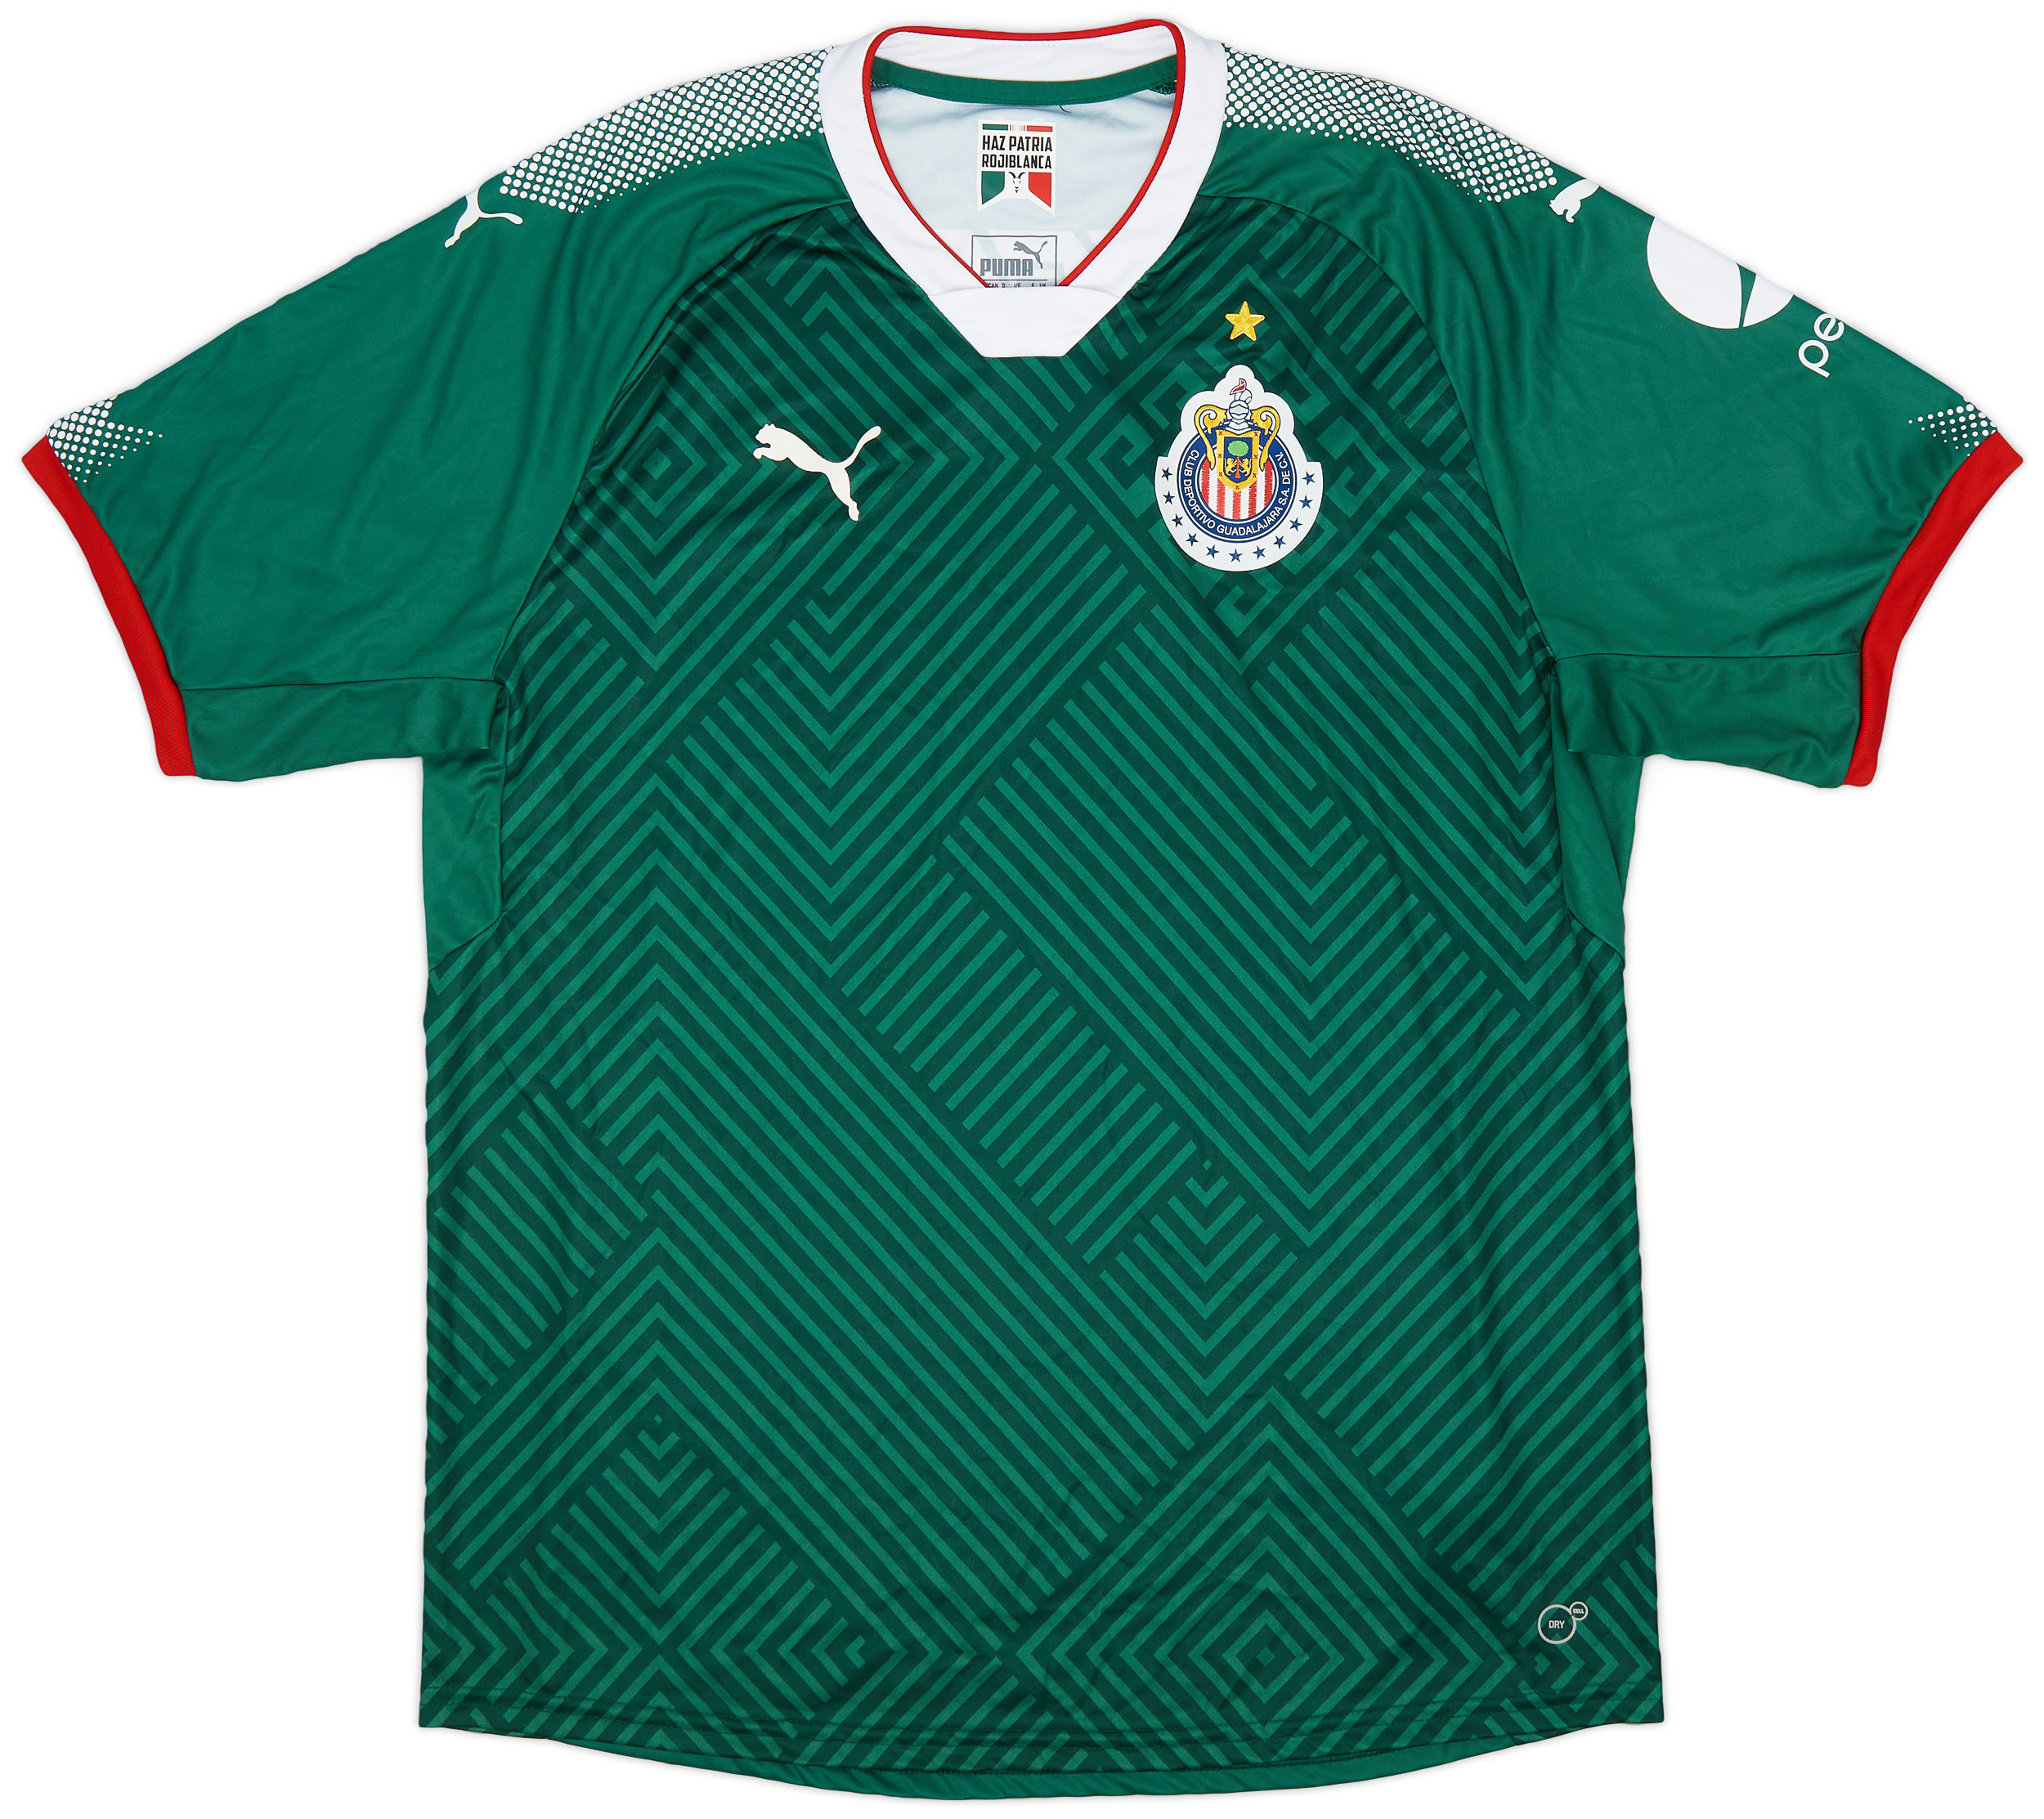 Chivas de Guadalajara  Derden  shirt  (Original)